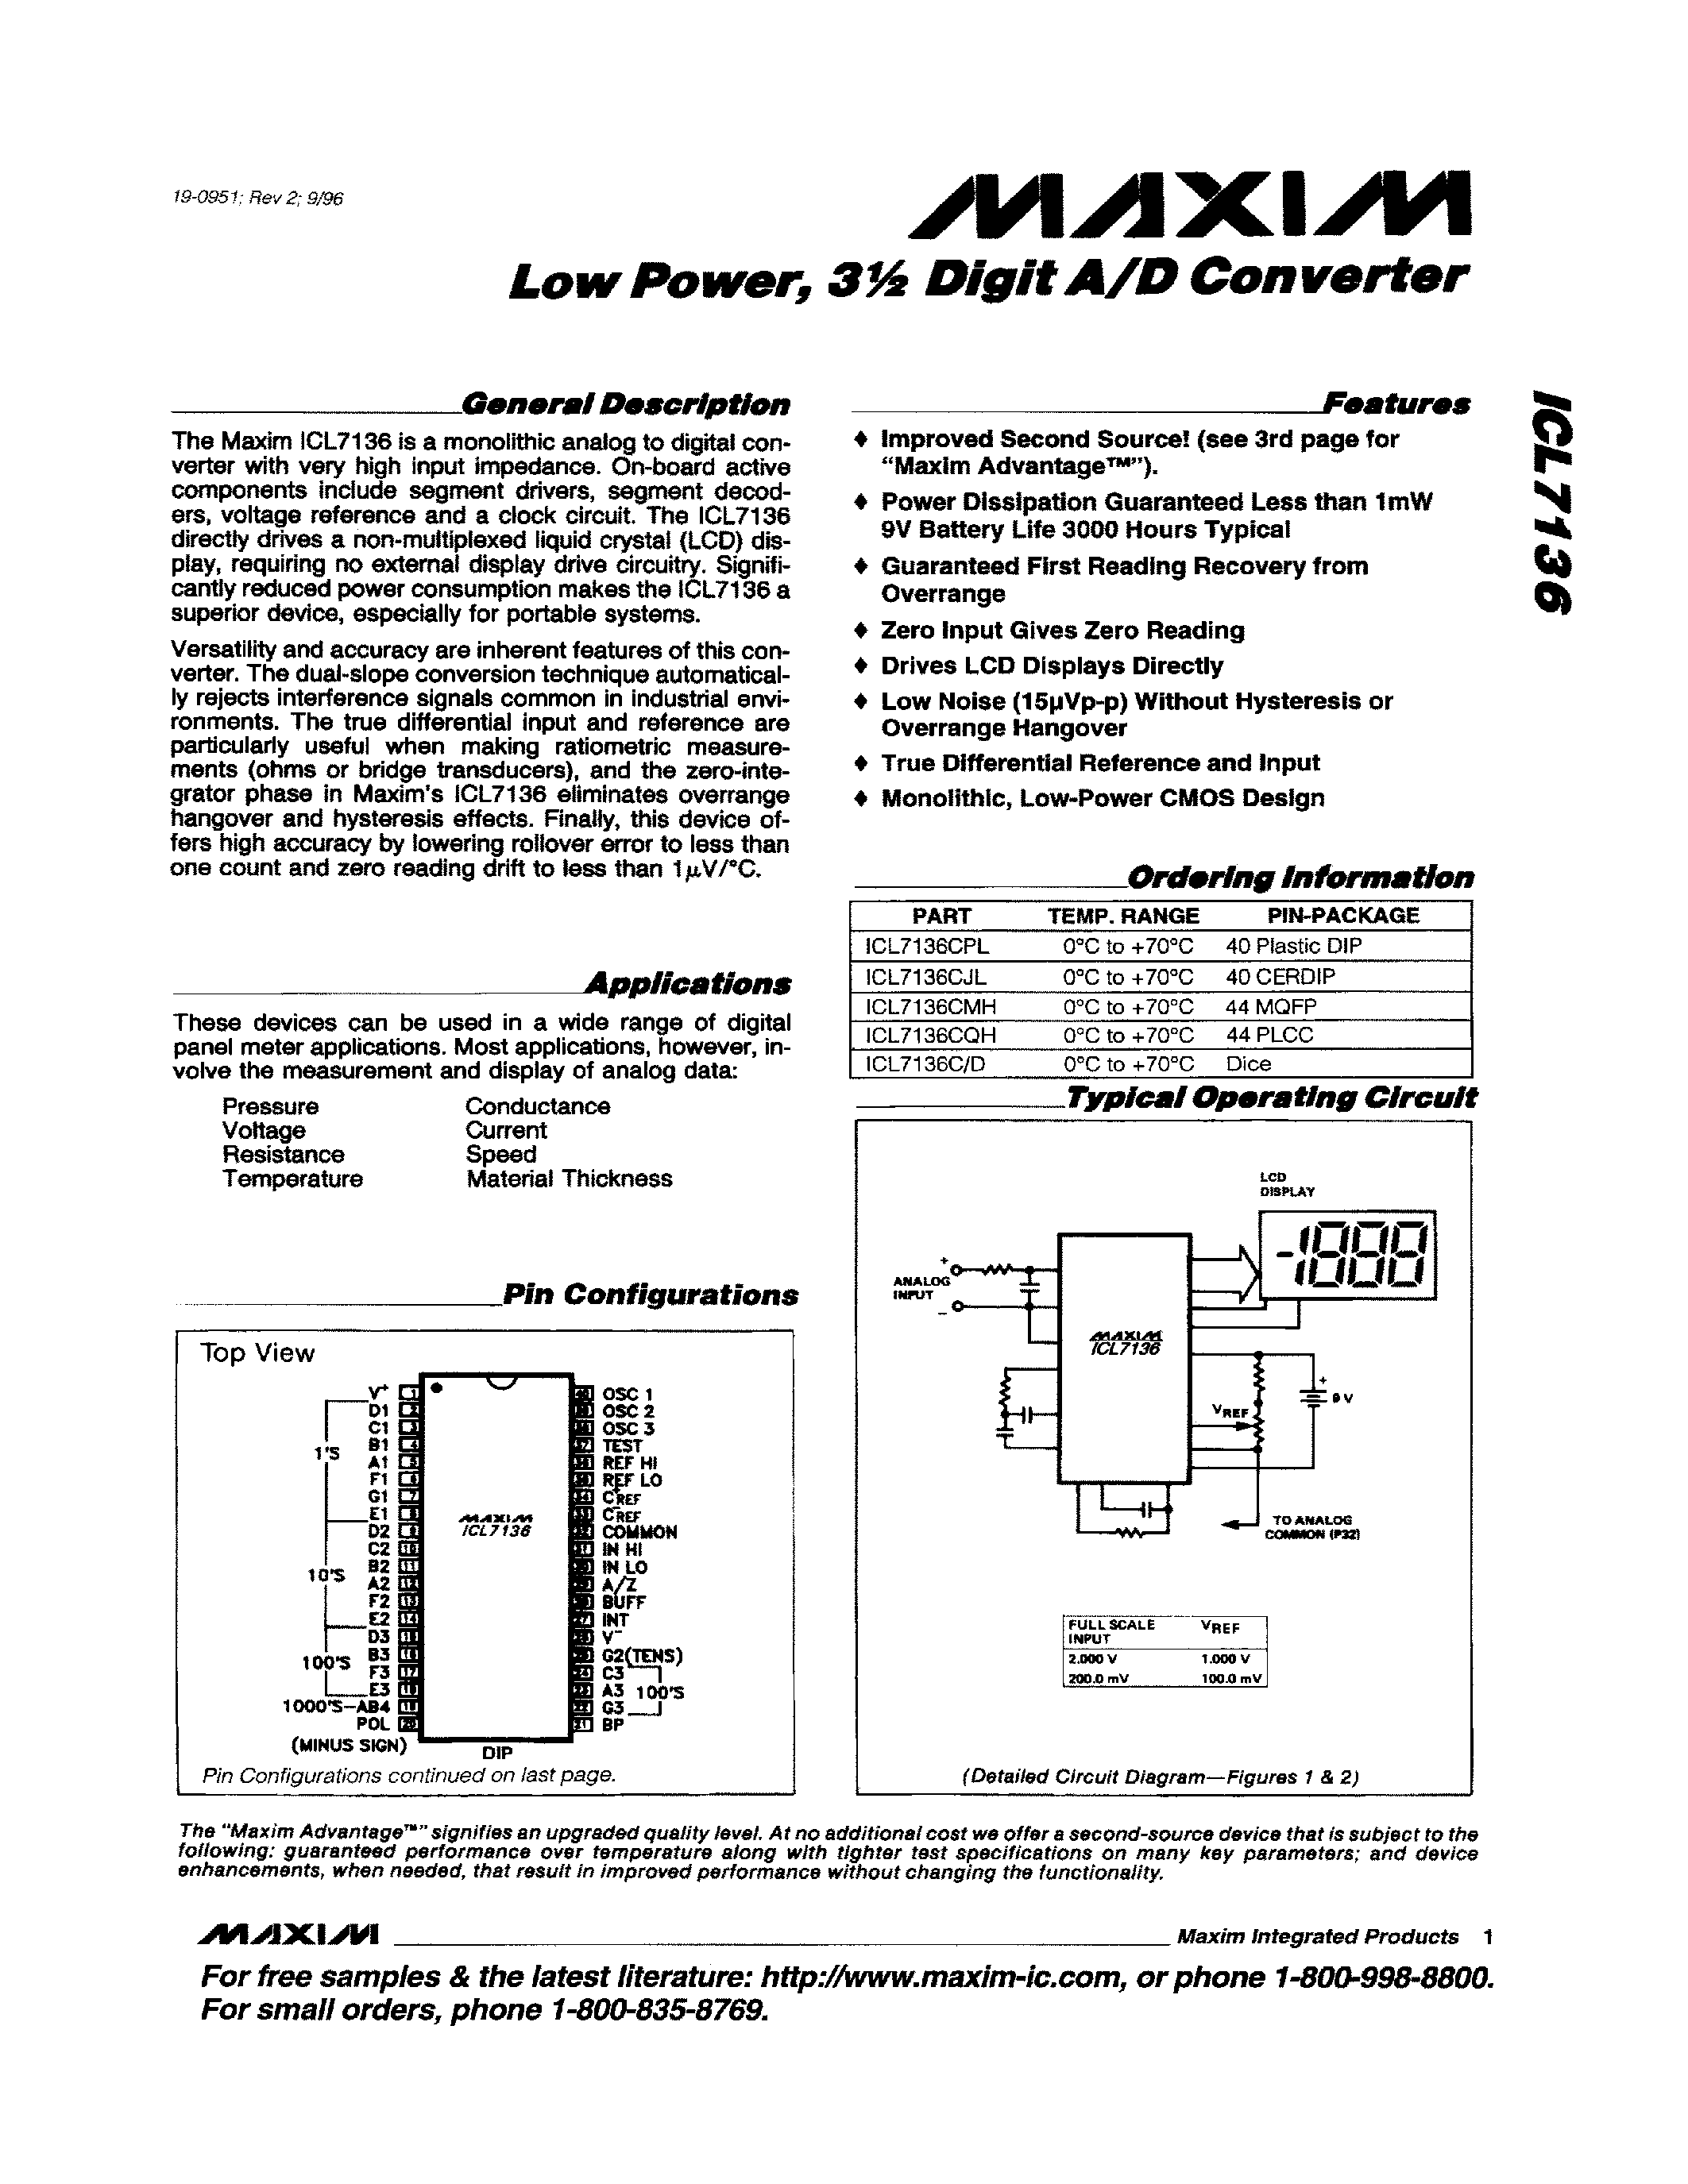 Datasheet ICL7136C/D - Low Power/ 3 Digit A/D Converter page 1